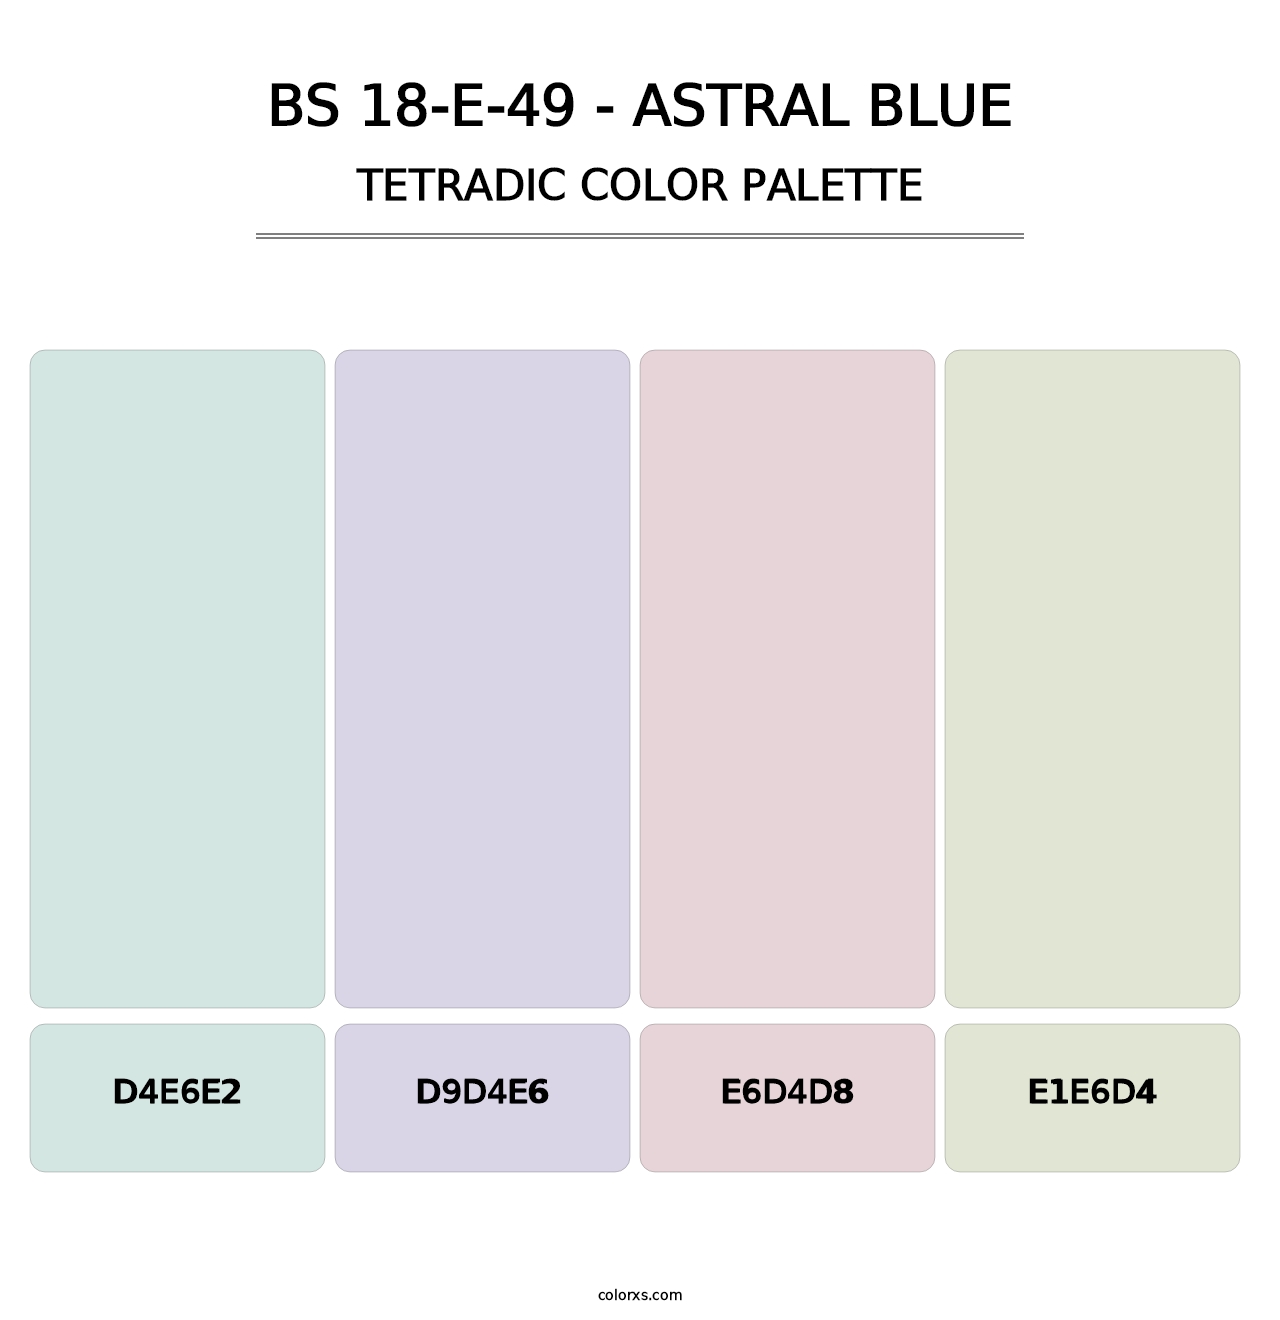 BS 18-E-49 - Astral Blue - Tetradic Color Palette